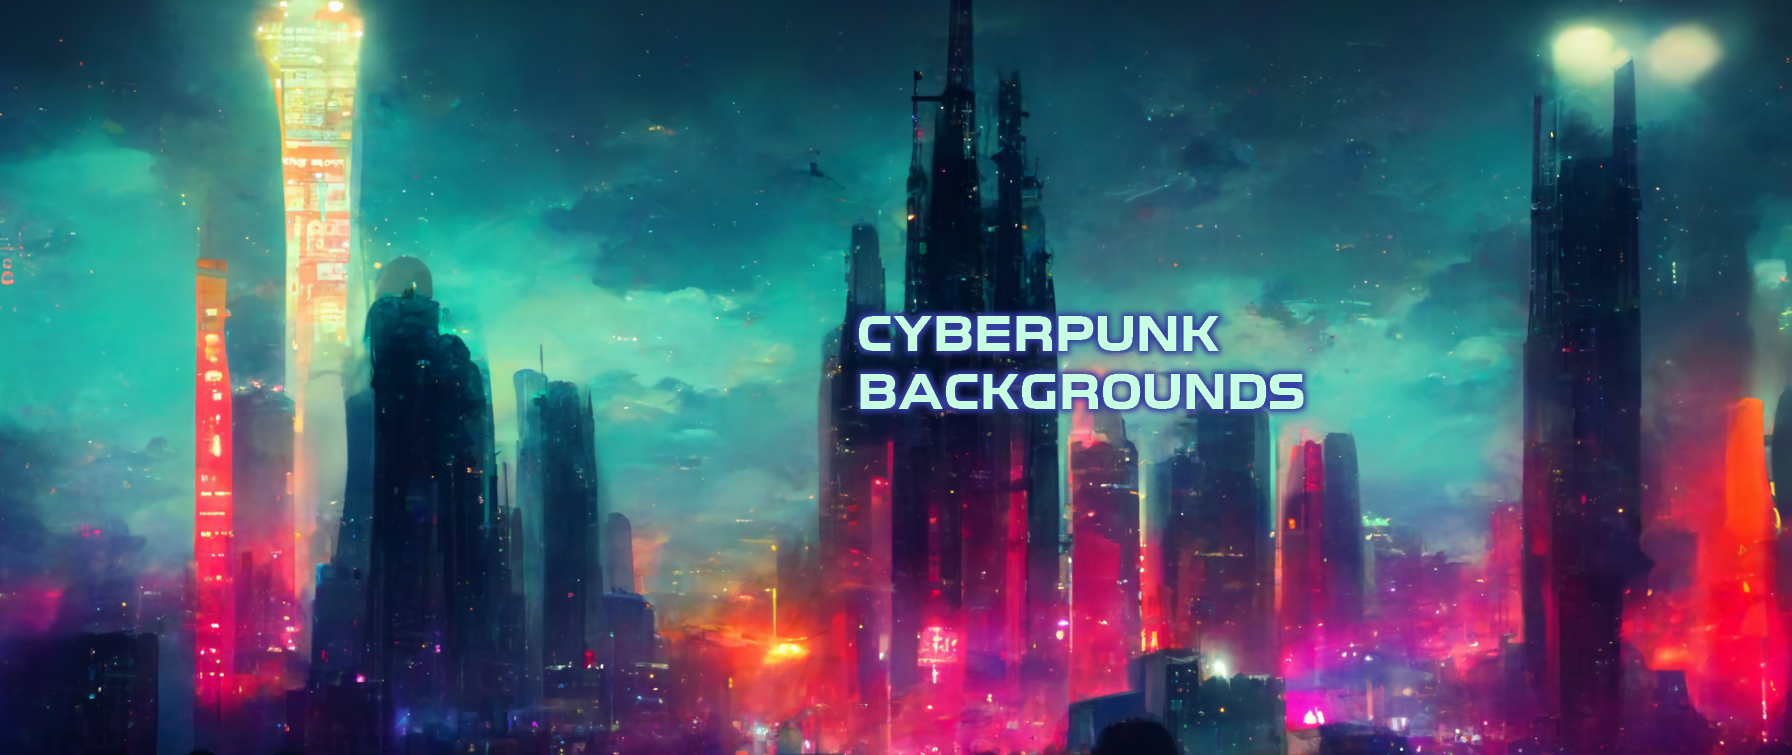 Cyberpunk Backgrounds